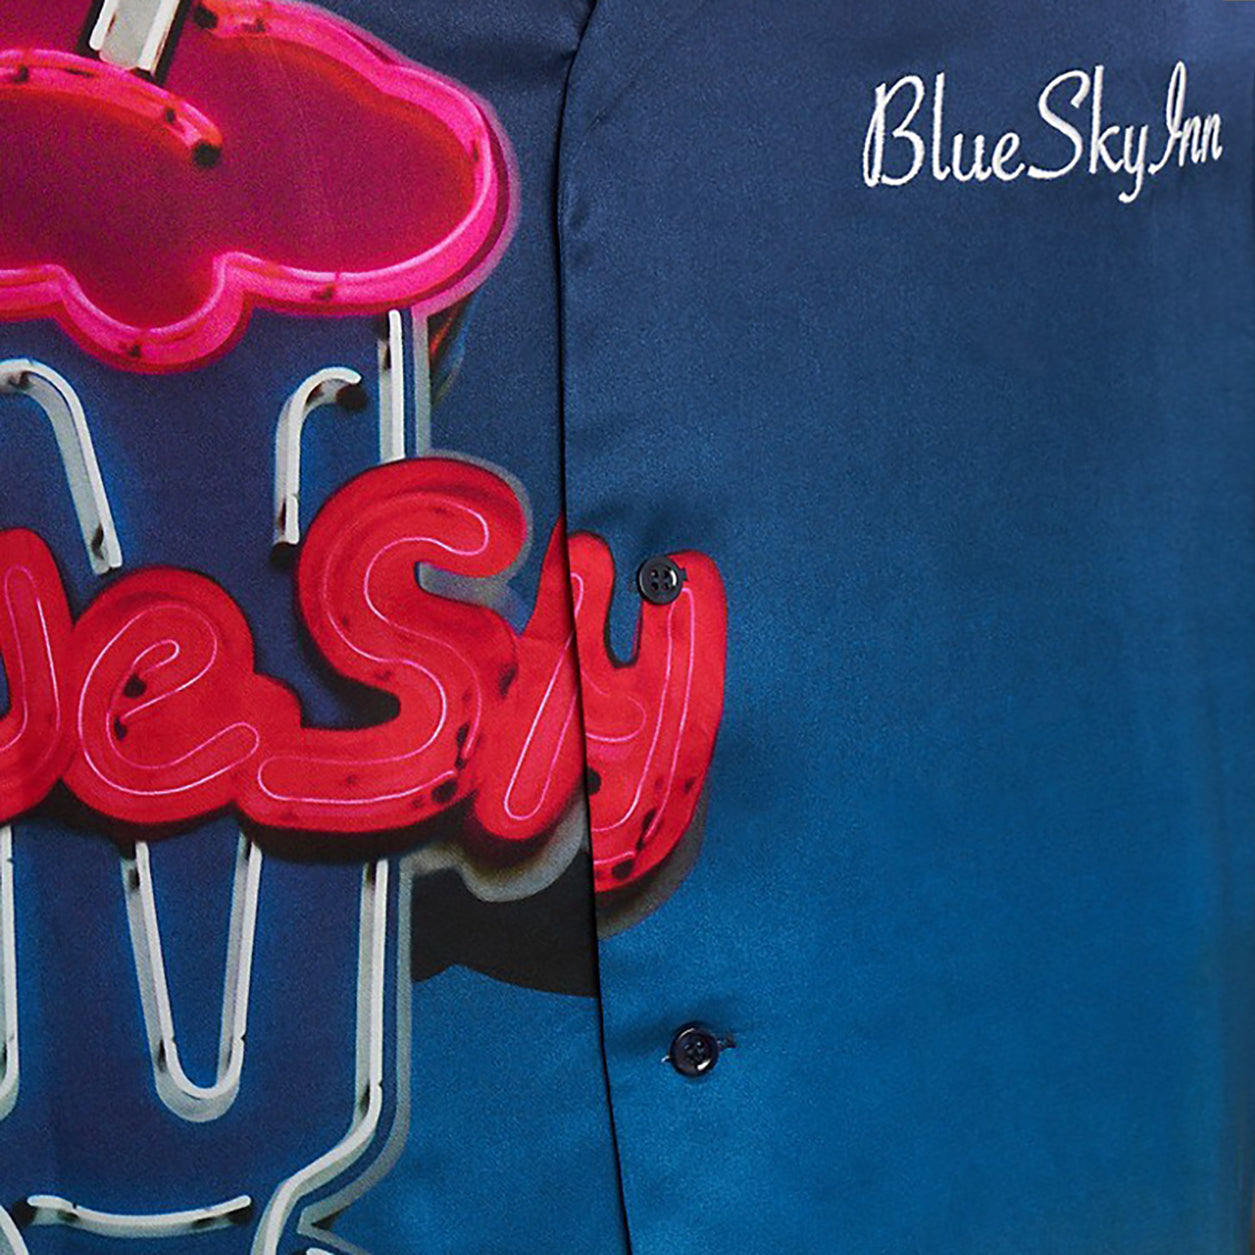 Blue Sky Inn Milkshake Shirt